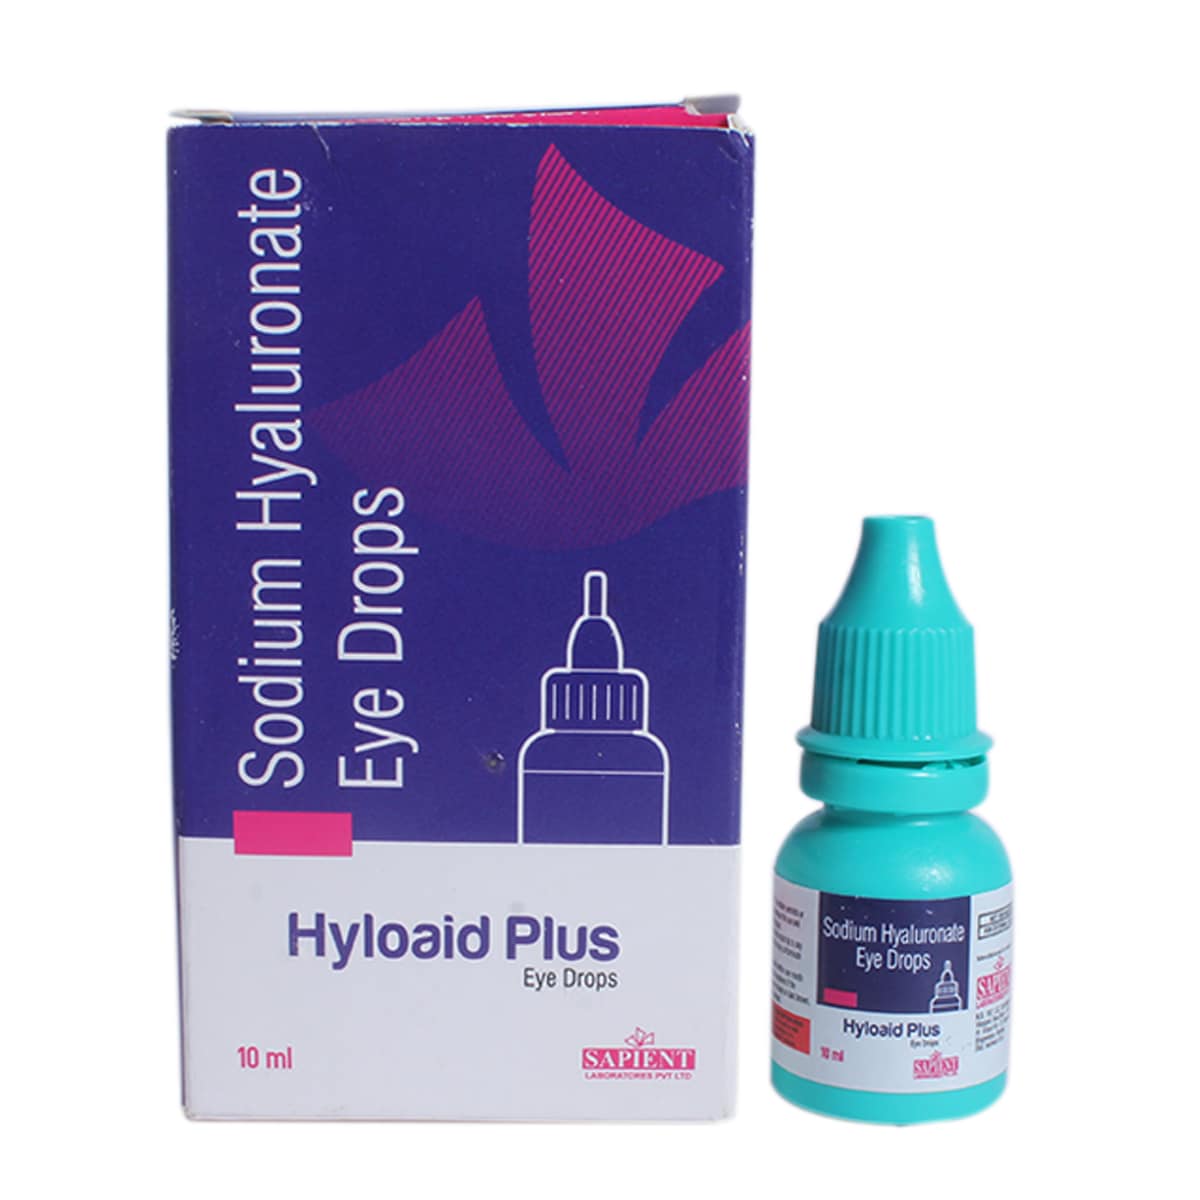 Hyloaid Plus 0.1%W/V Eye Drops 10ml, Pack of 1 Drops